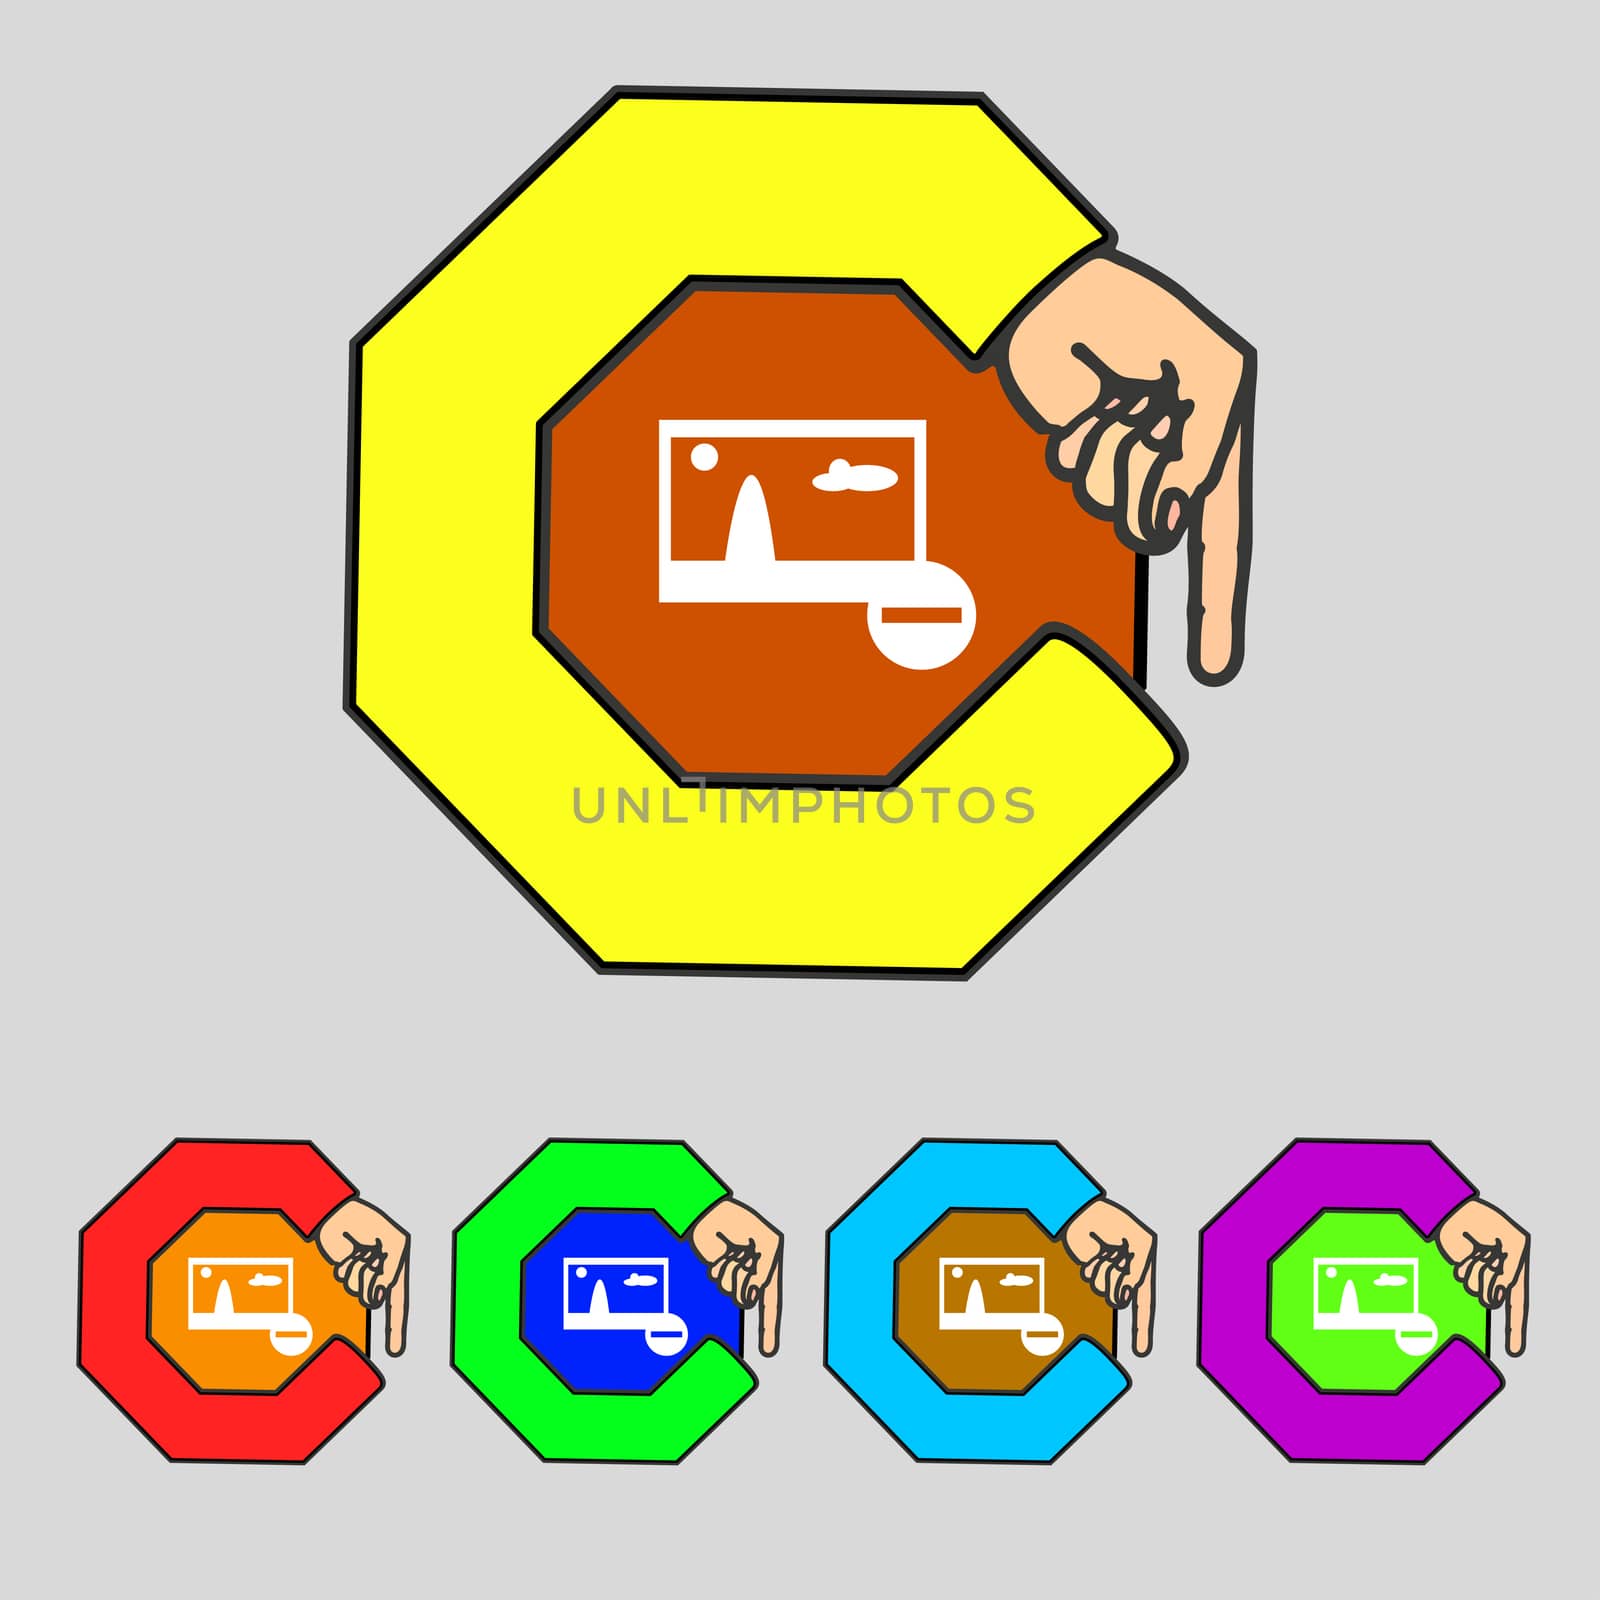 minus File JPG sign icon. Download image file symbol. Set colourful buttons. Modern UI website navigation  by serhii_lohvyniuk